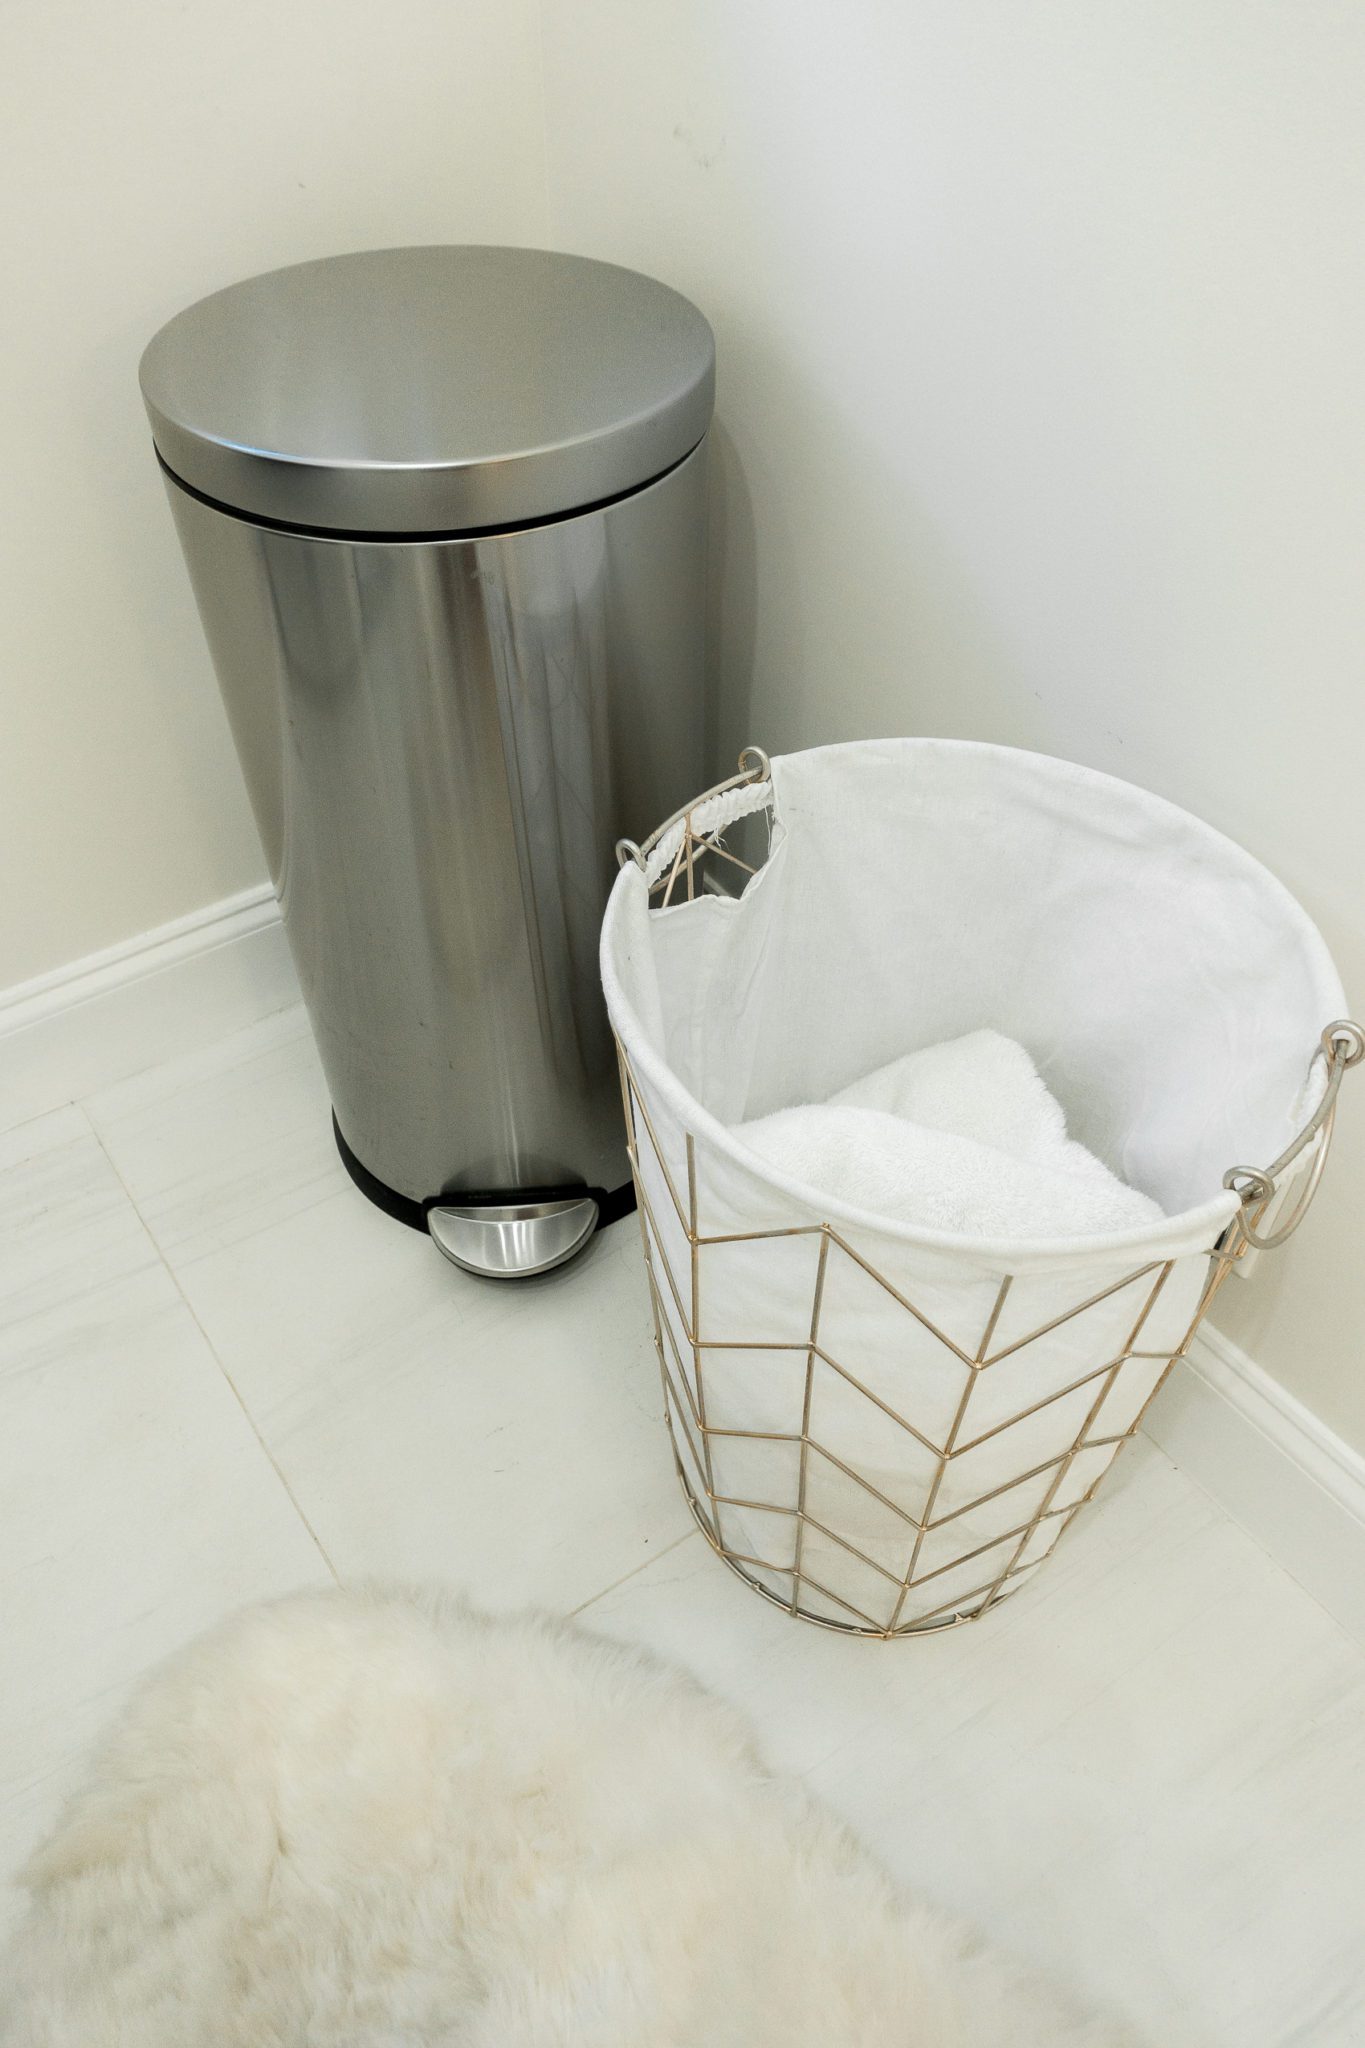 trash bin and laundry basket